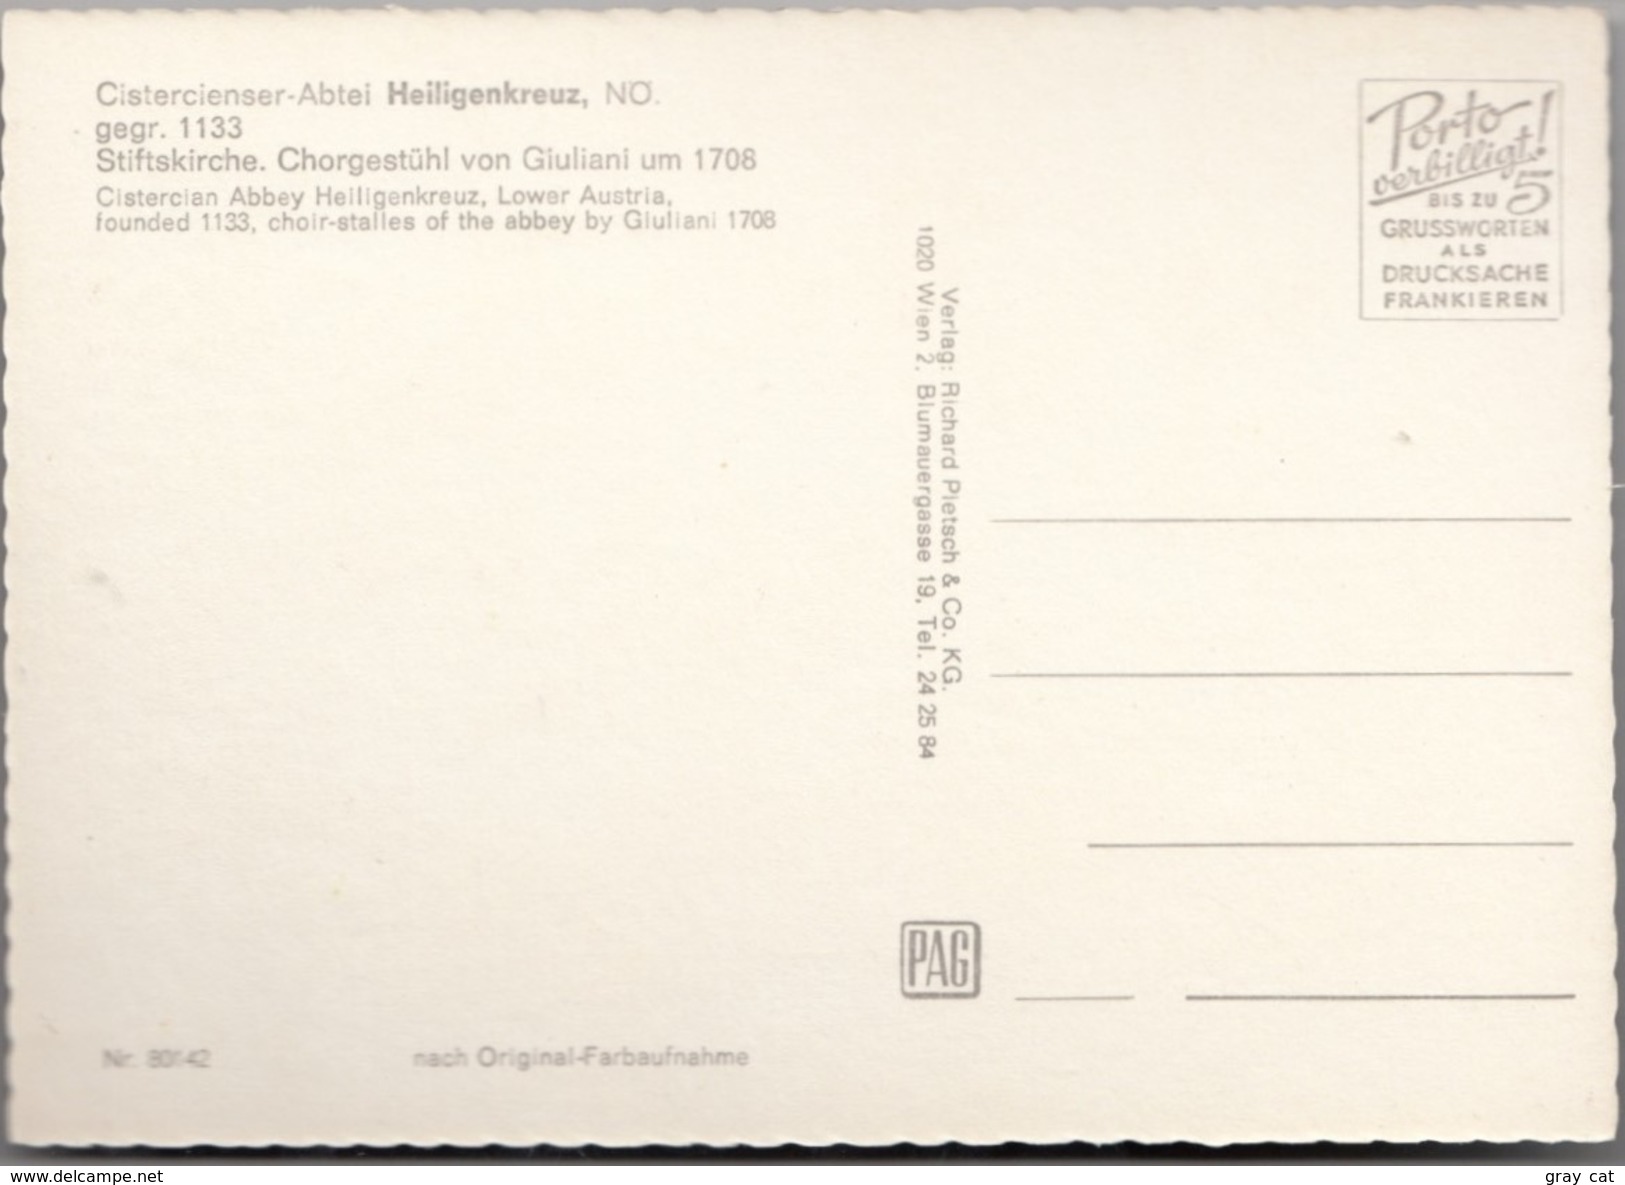 Cistercian Abbey Heiligenkreuz, Lower Austria, Choir-stalles Of The Abbey, Unused Postcard [19745] - Heiligenkreuz